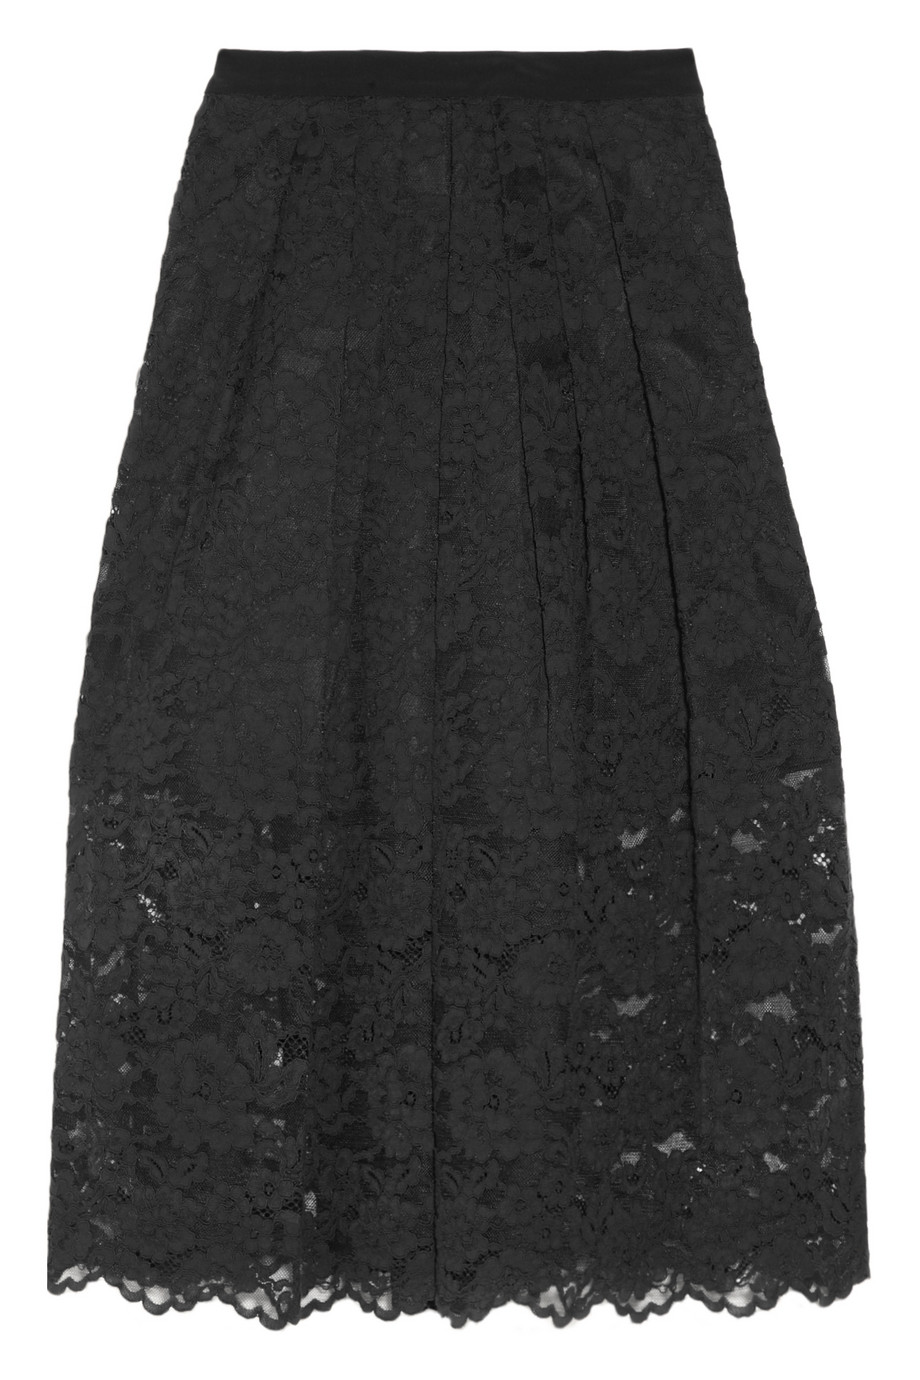 Tibi Cottonblend Lace Midi Skirt in Black | Lyst